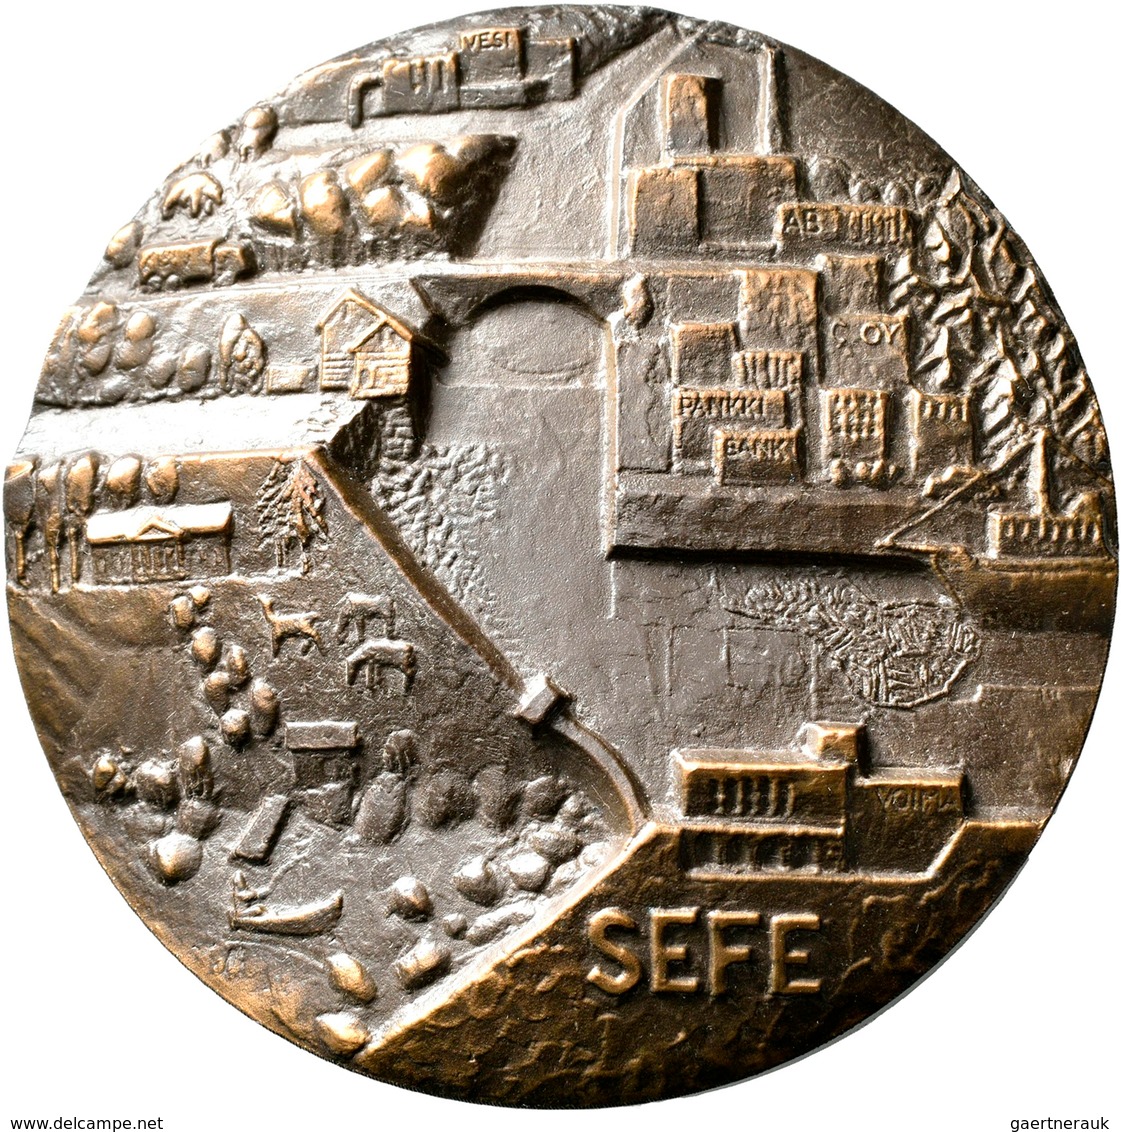 Medaillen Alle Welt: Finnland: Bronzemedaille 1985 Von Kauko Räsänen, SEFE, 80 Mm, Ca. 2 Cm Dick, 66 - Non Classés